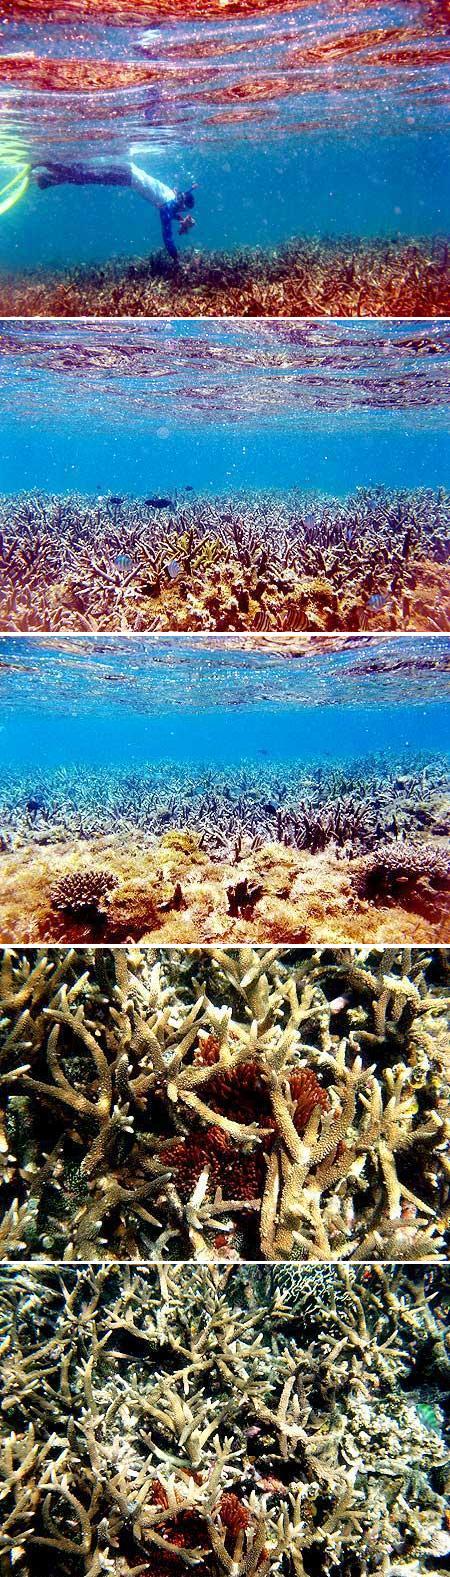 Terumbu karang sebelah timur Karang Kering, Sungailiat, Bangka, didominasi oleh jenis karang branching